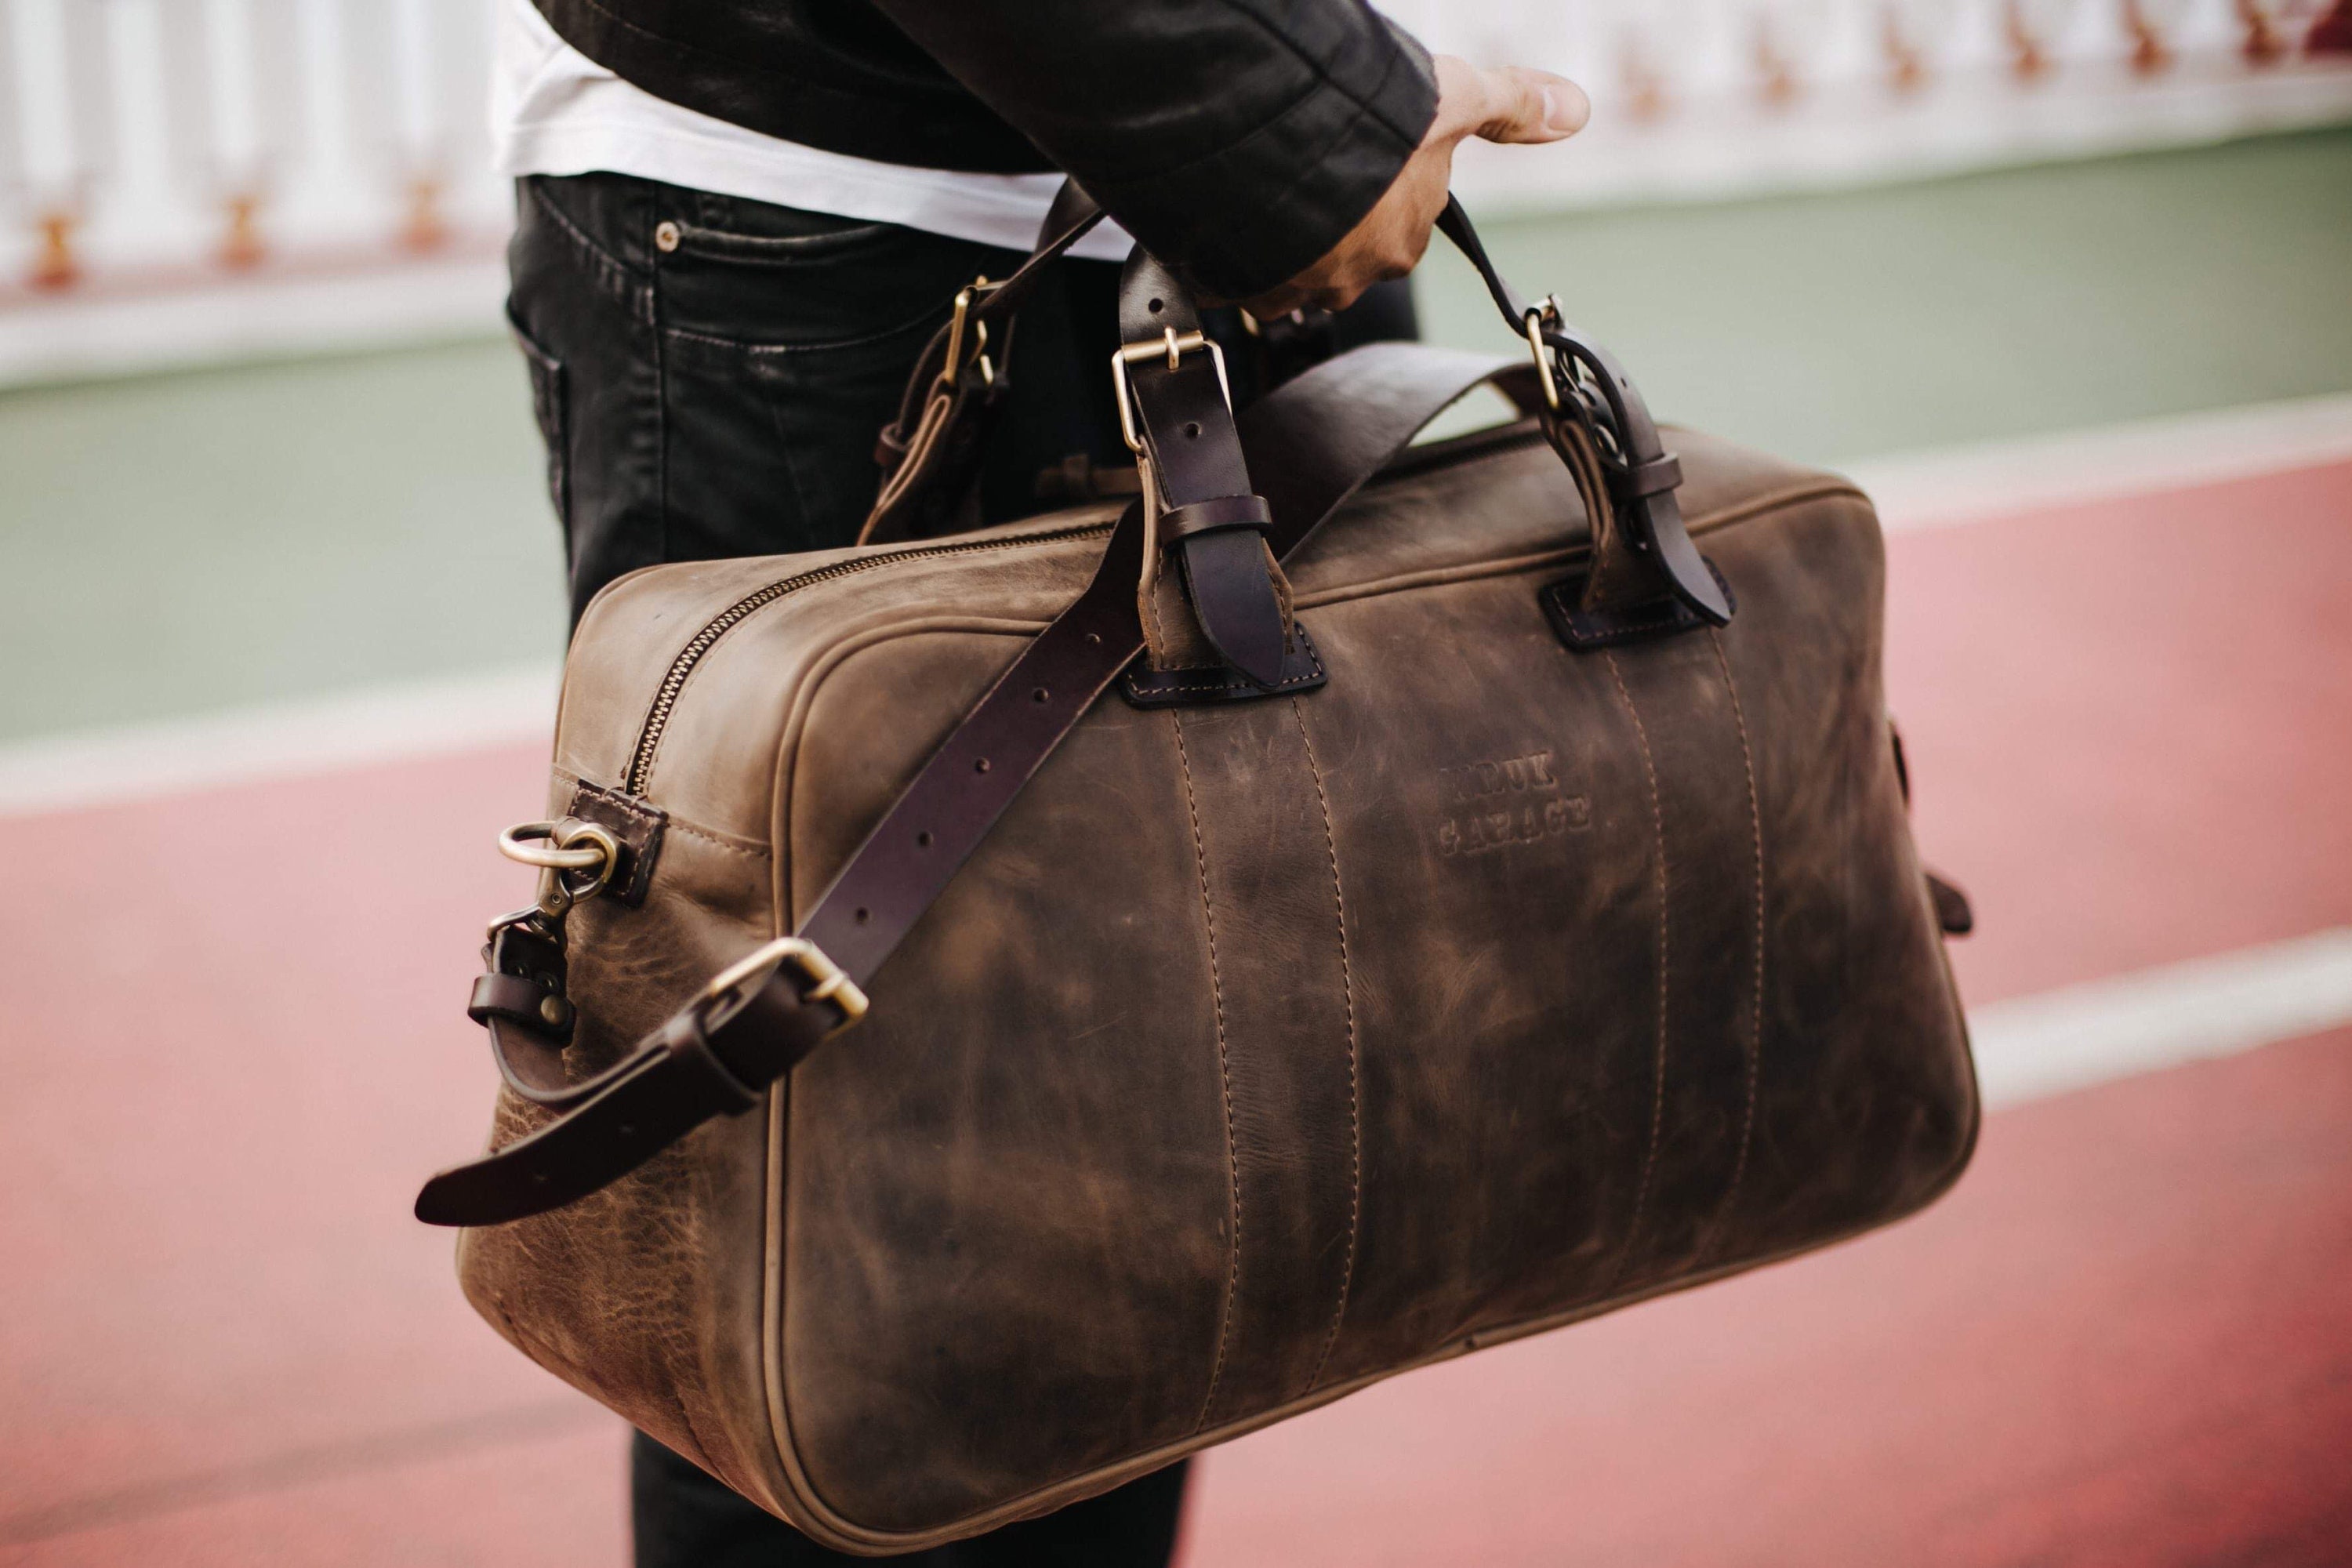 Carryall Travel Bag Large leather Bag | Etsy